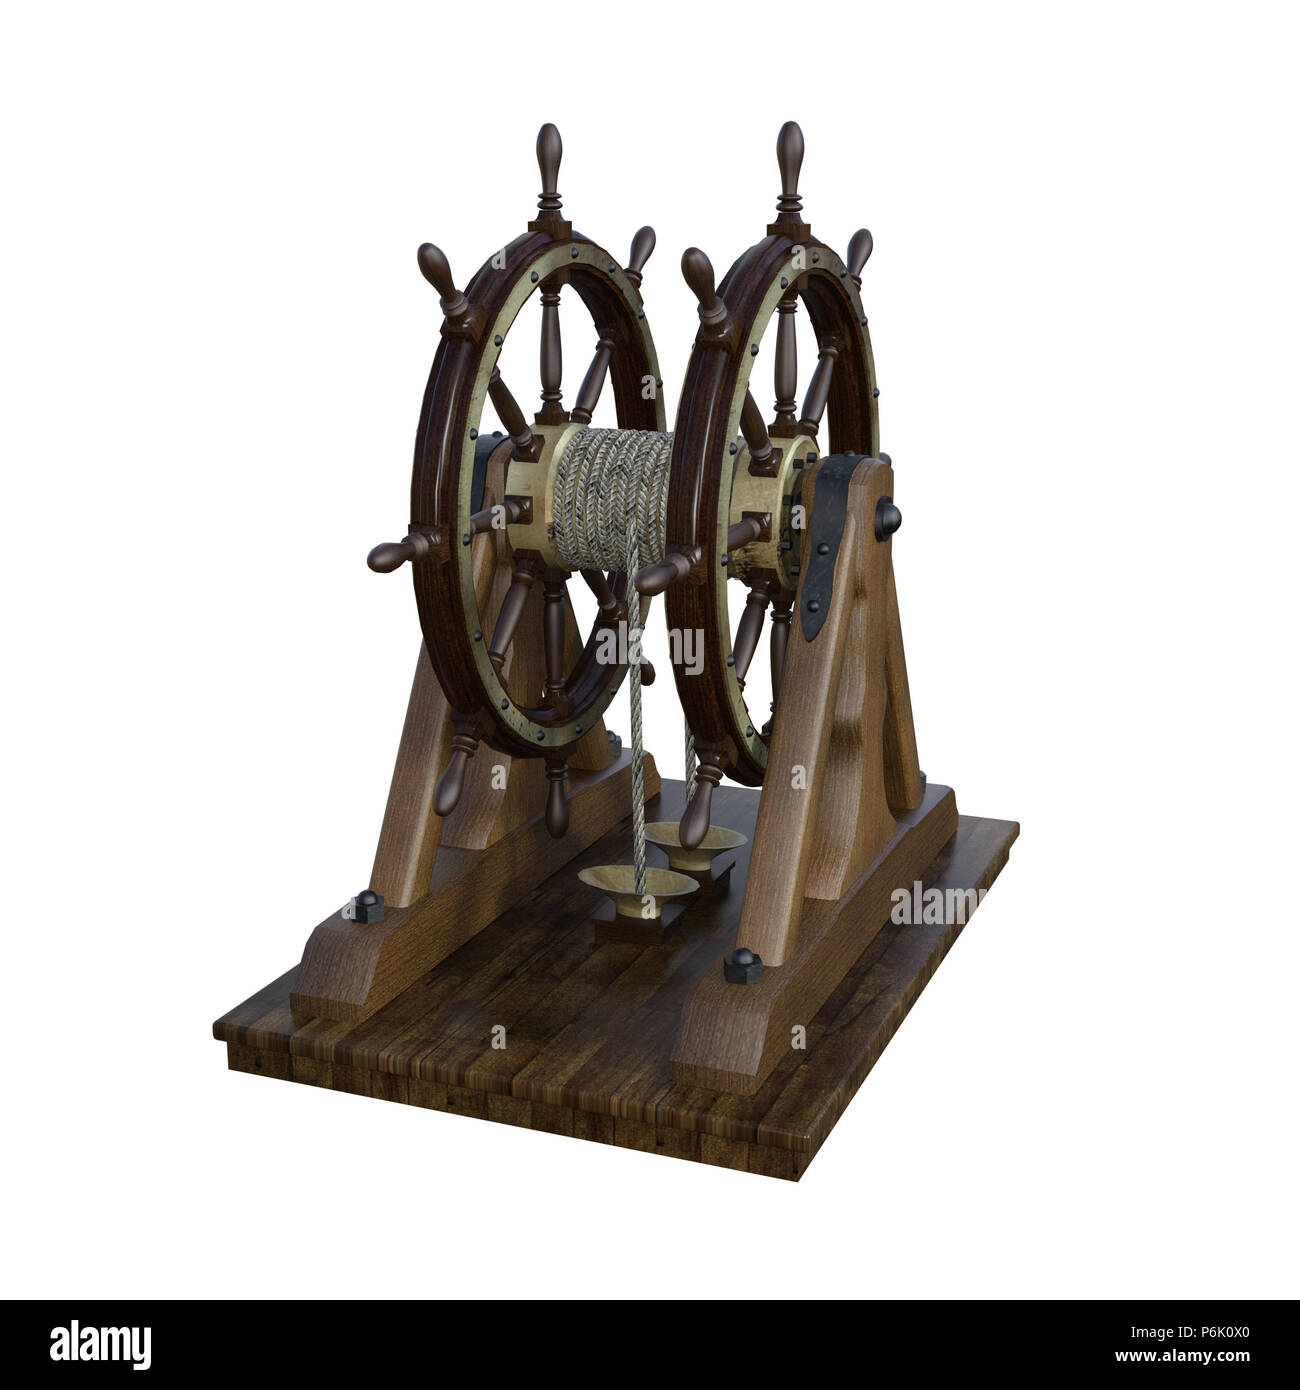 3d Rendering Of Vintage Wooden Ship Steering Wheel Wall Clock On A